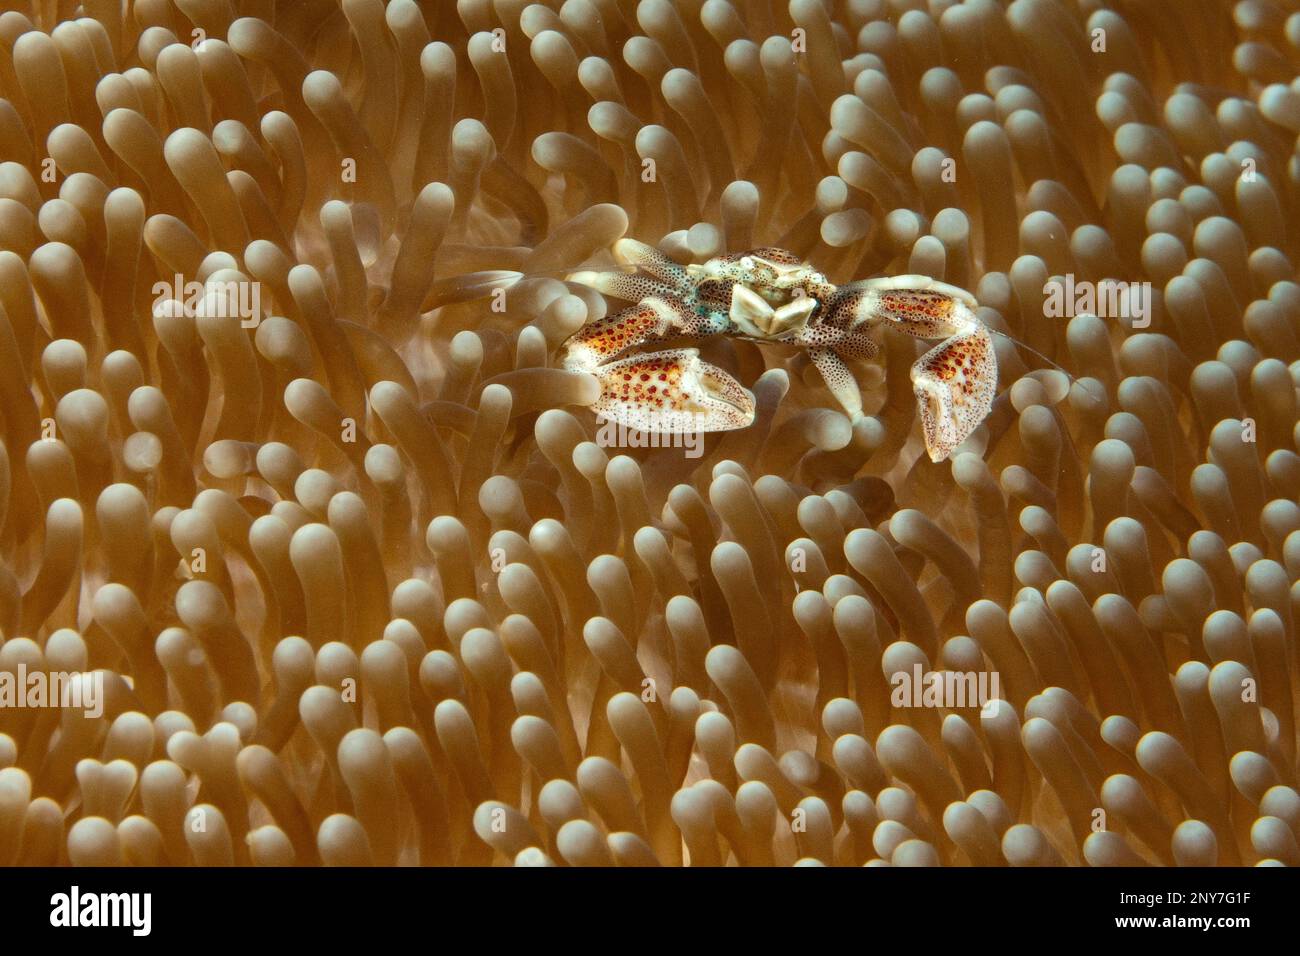 Spotted anemone crab, Spotted anemone crab, spotted porcelain crab (Neopetrolisthes maculatus), Indo-Pacific Stock Photo